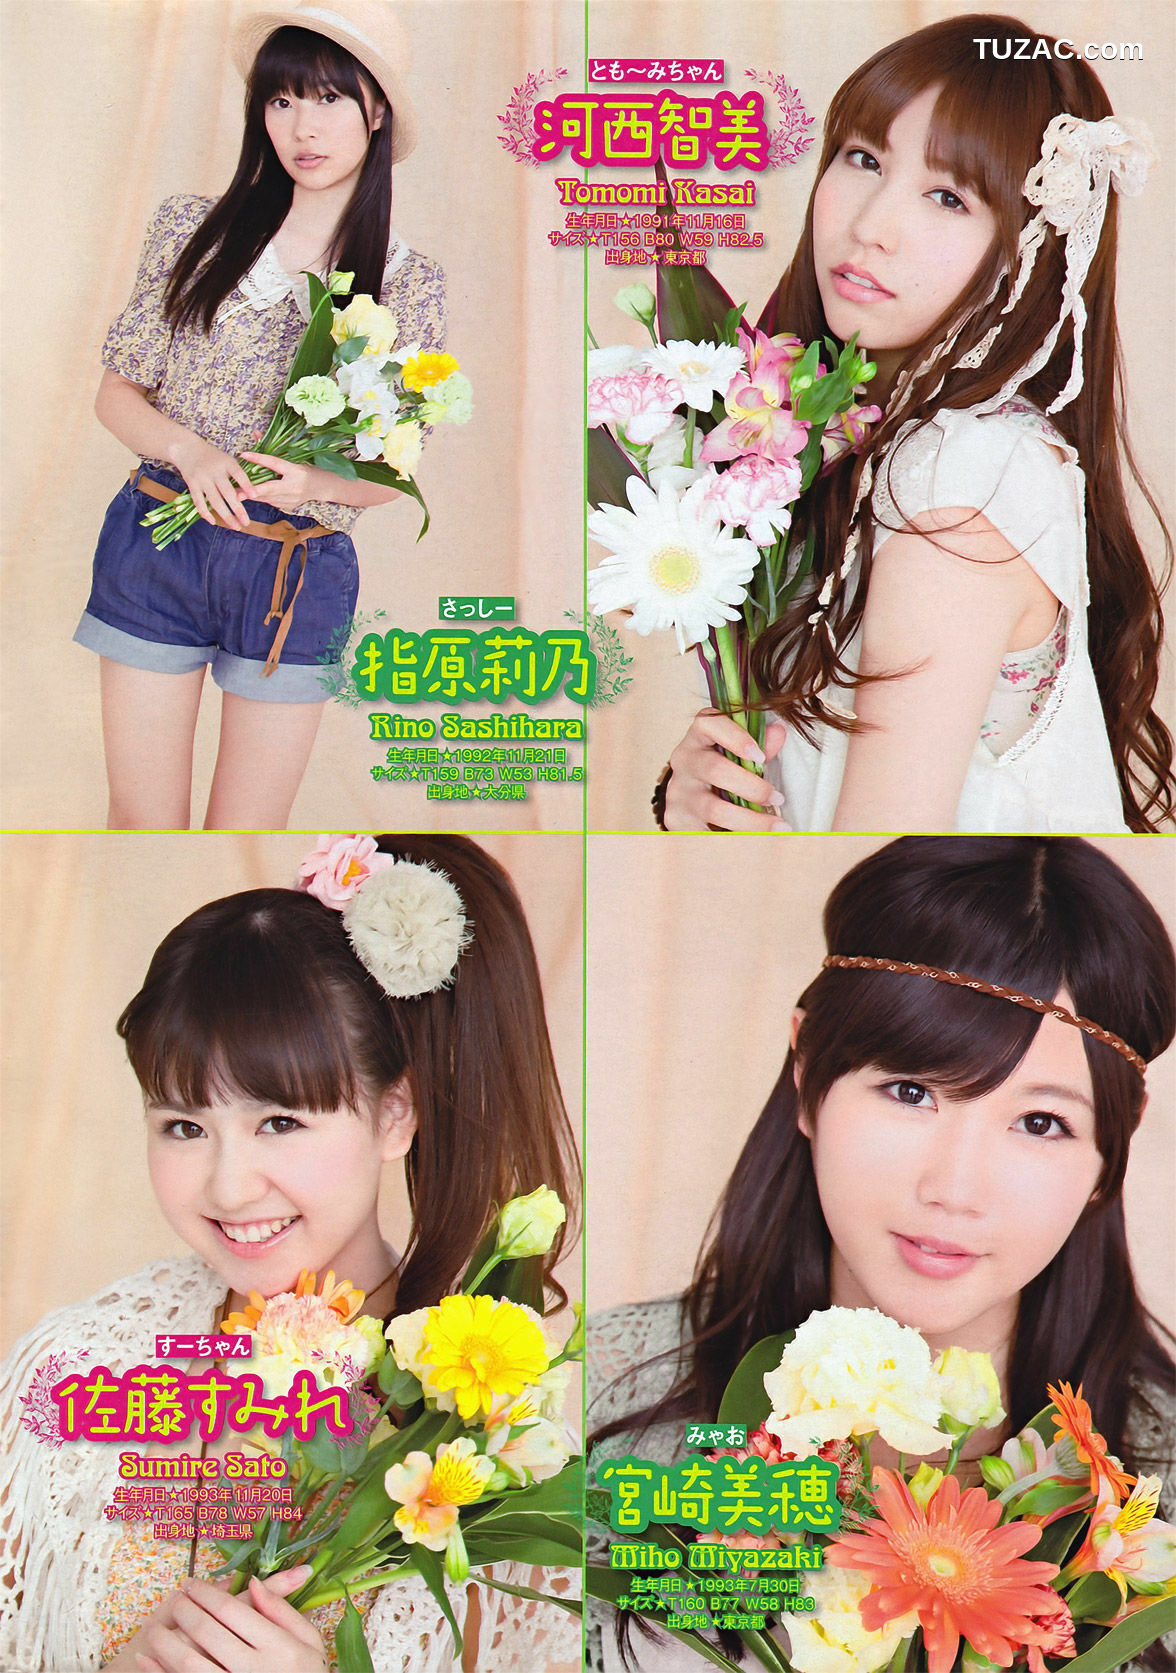 Young Magazine杂志写真_ YM7 松井珠理奈 NMB48 2011年No.27 写真杂志[14P]